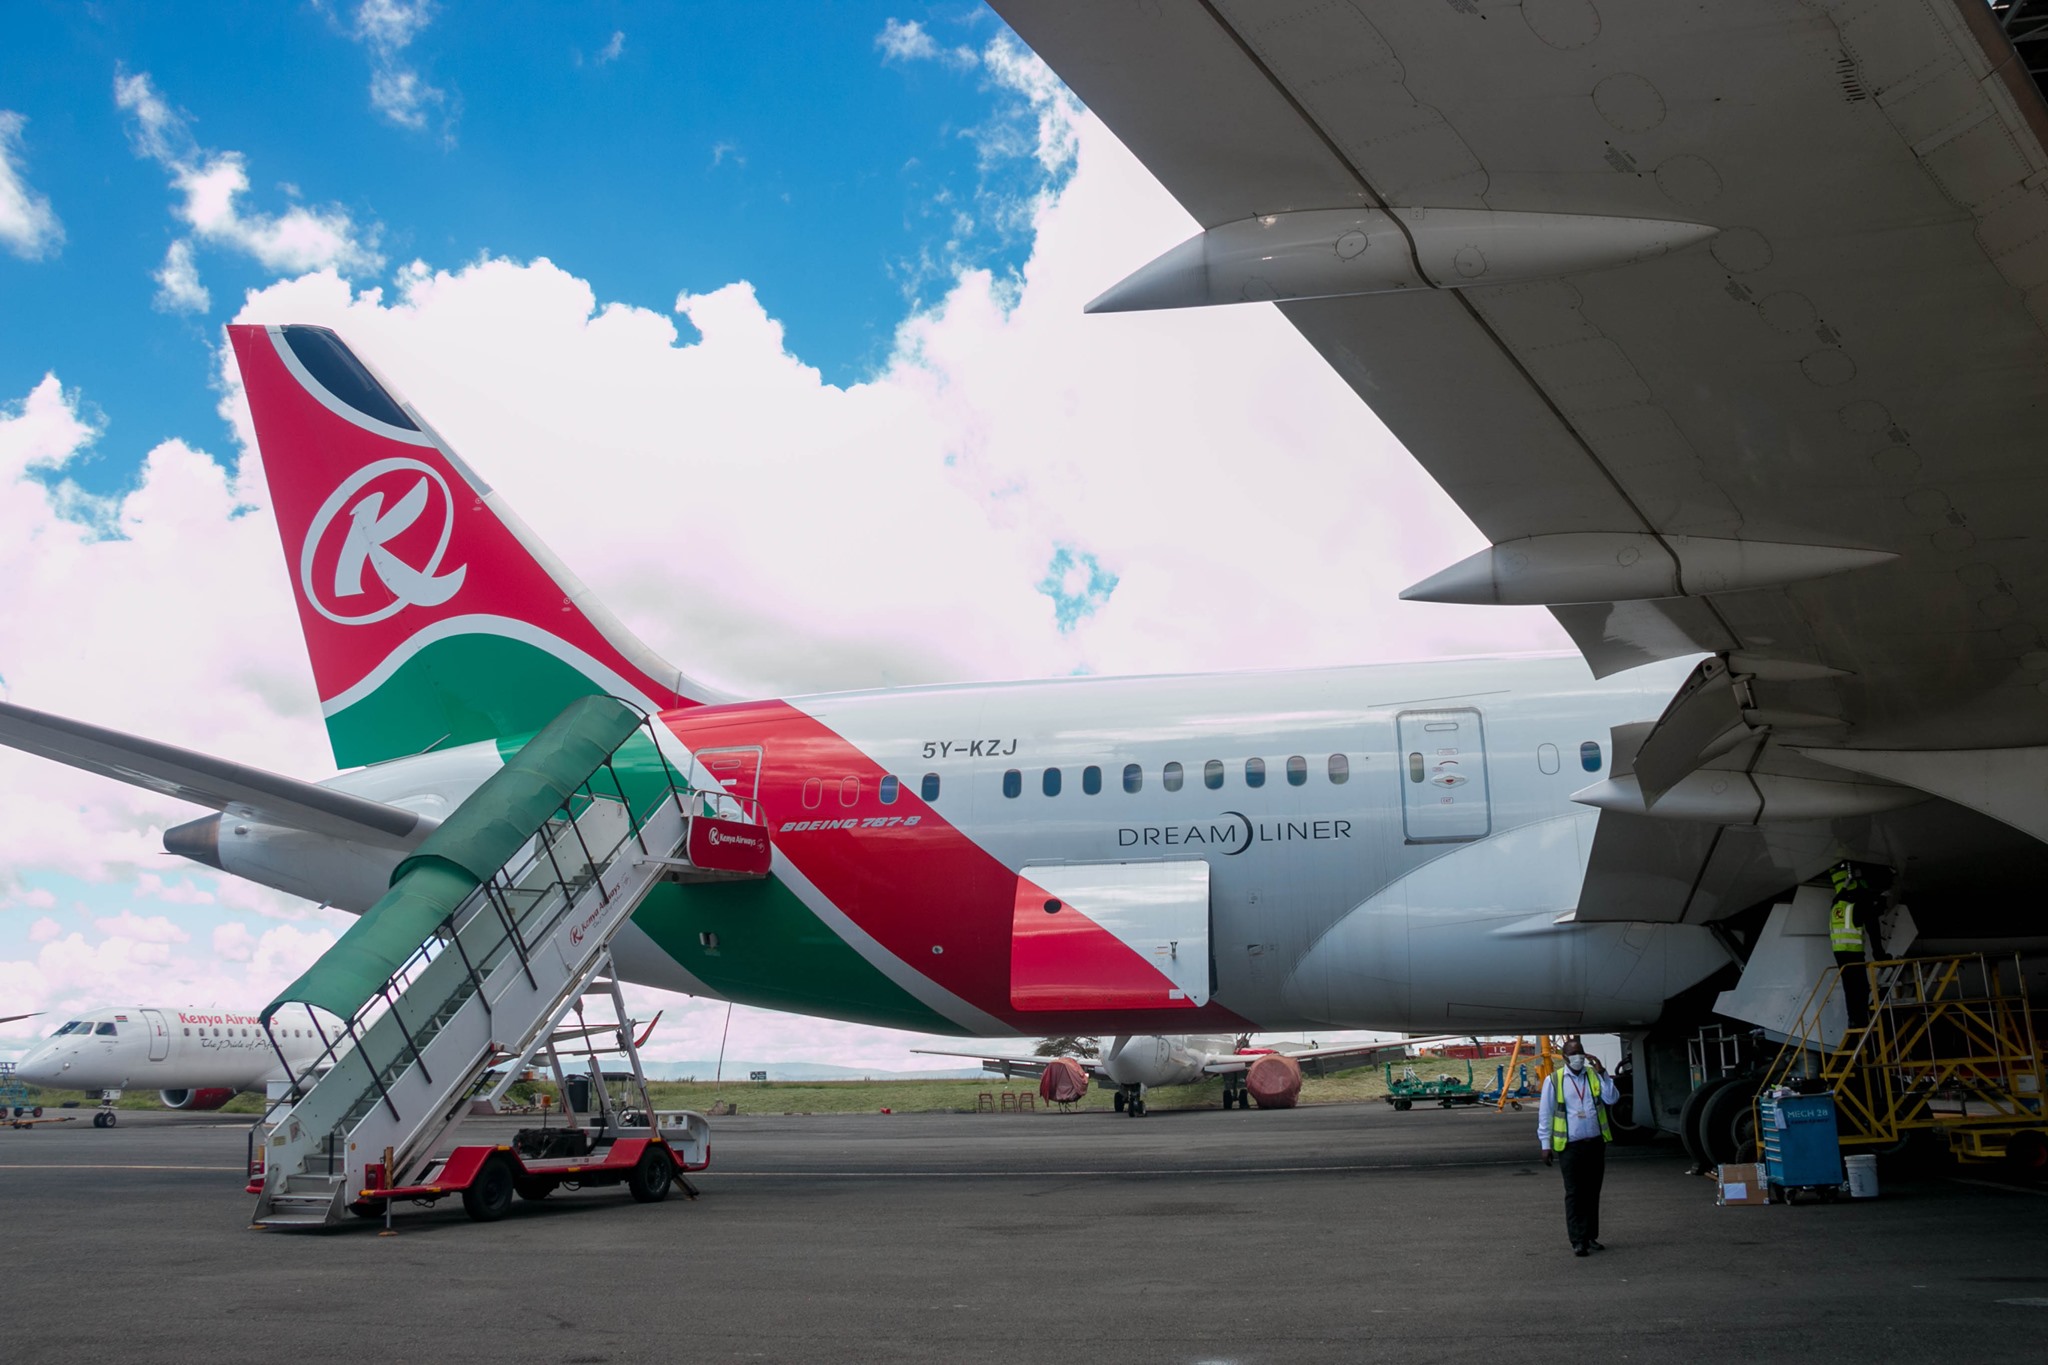 Kenya Airways will resume flights from Nairobi to London Heathrow